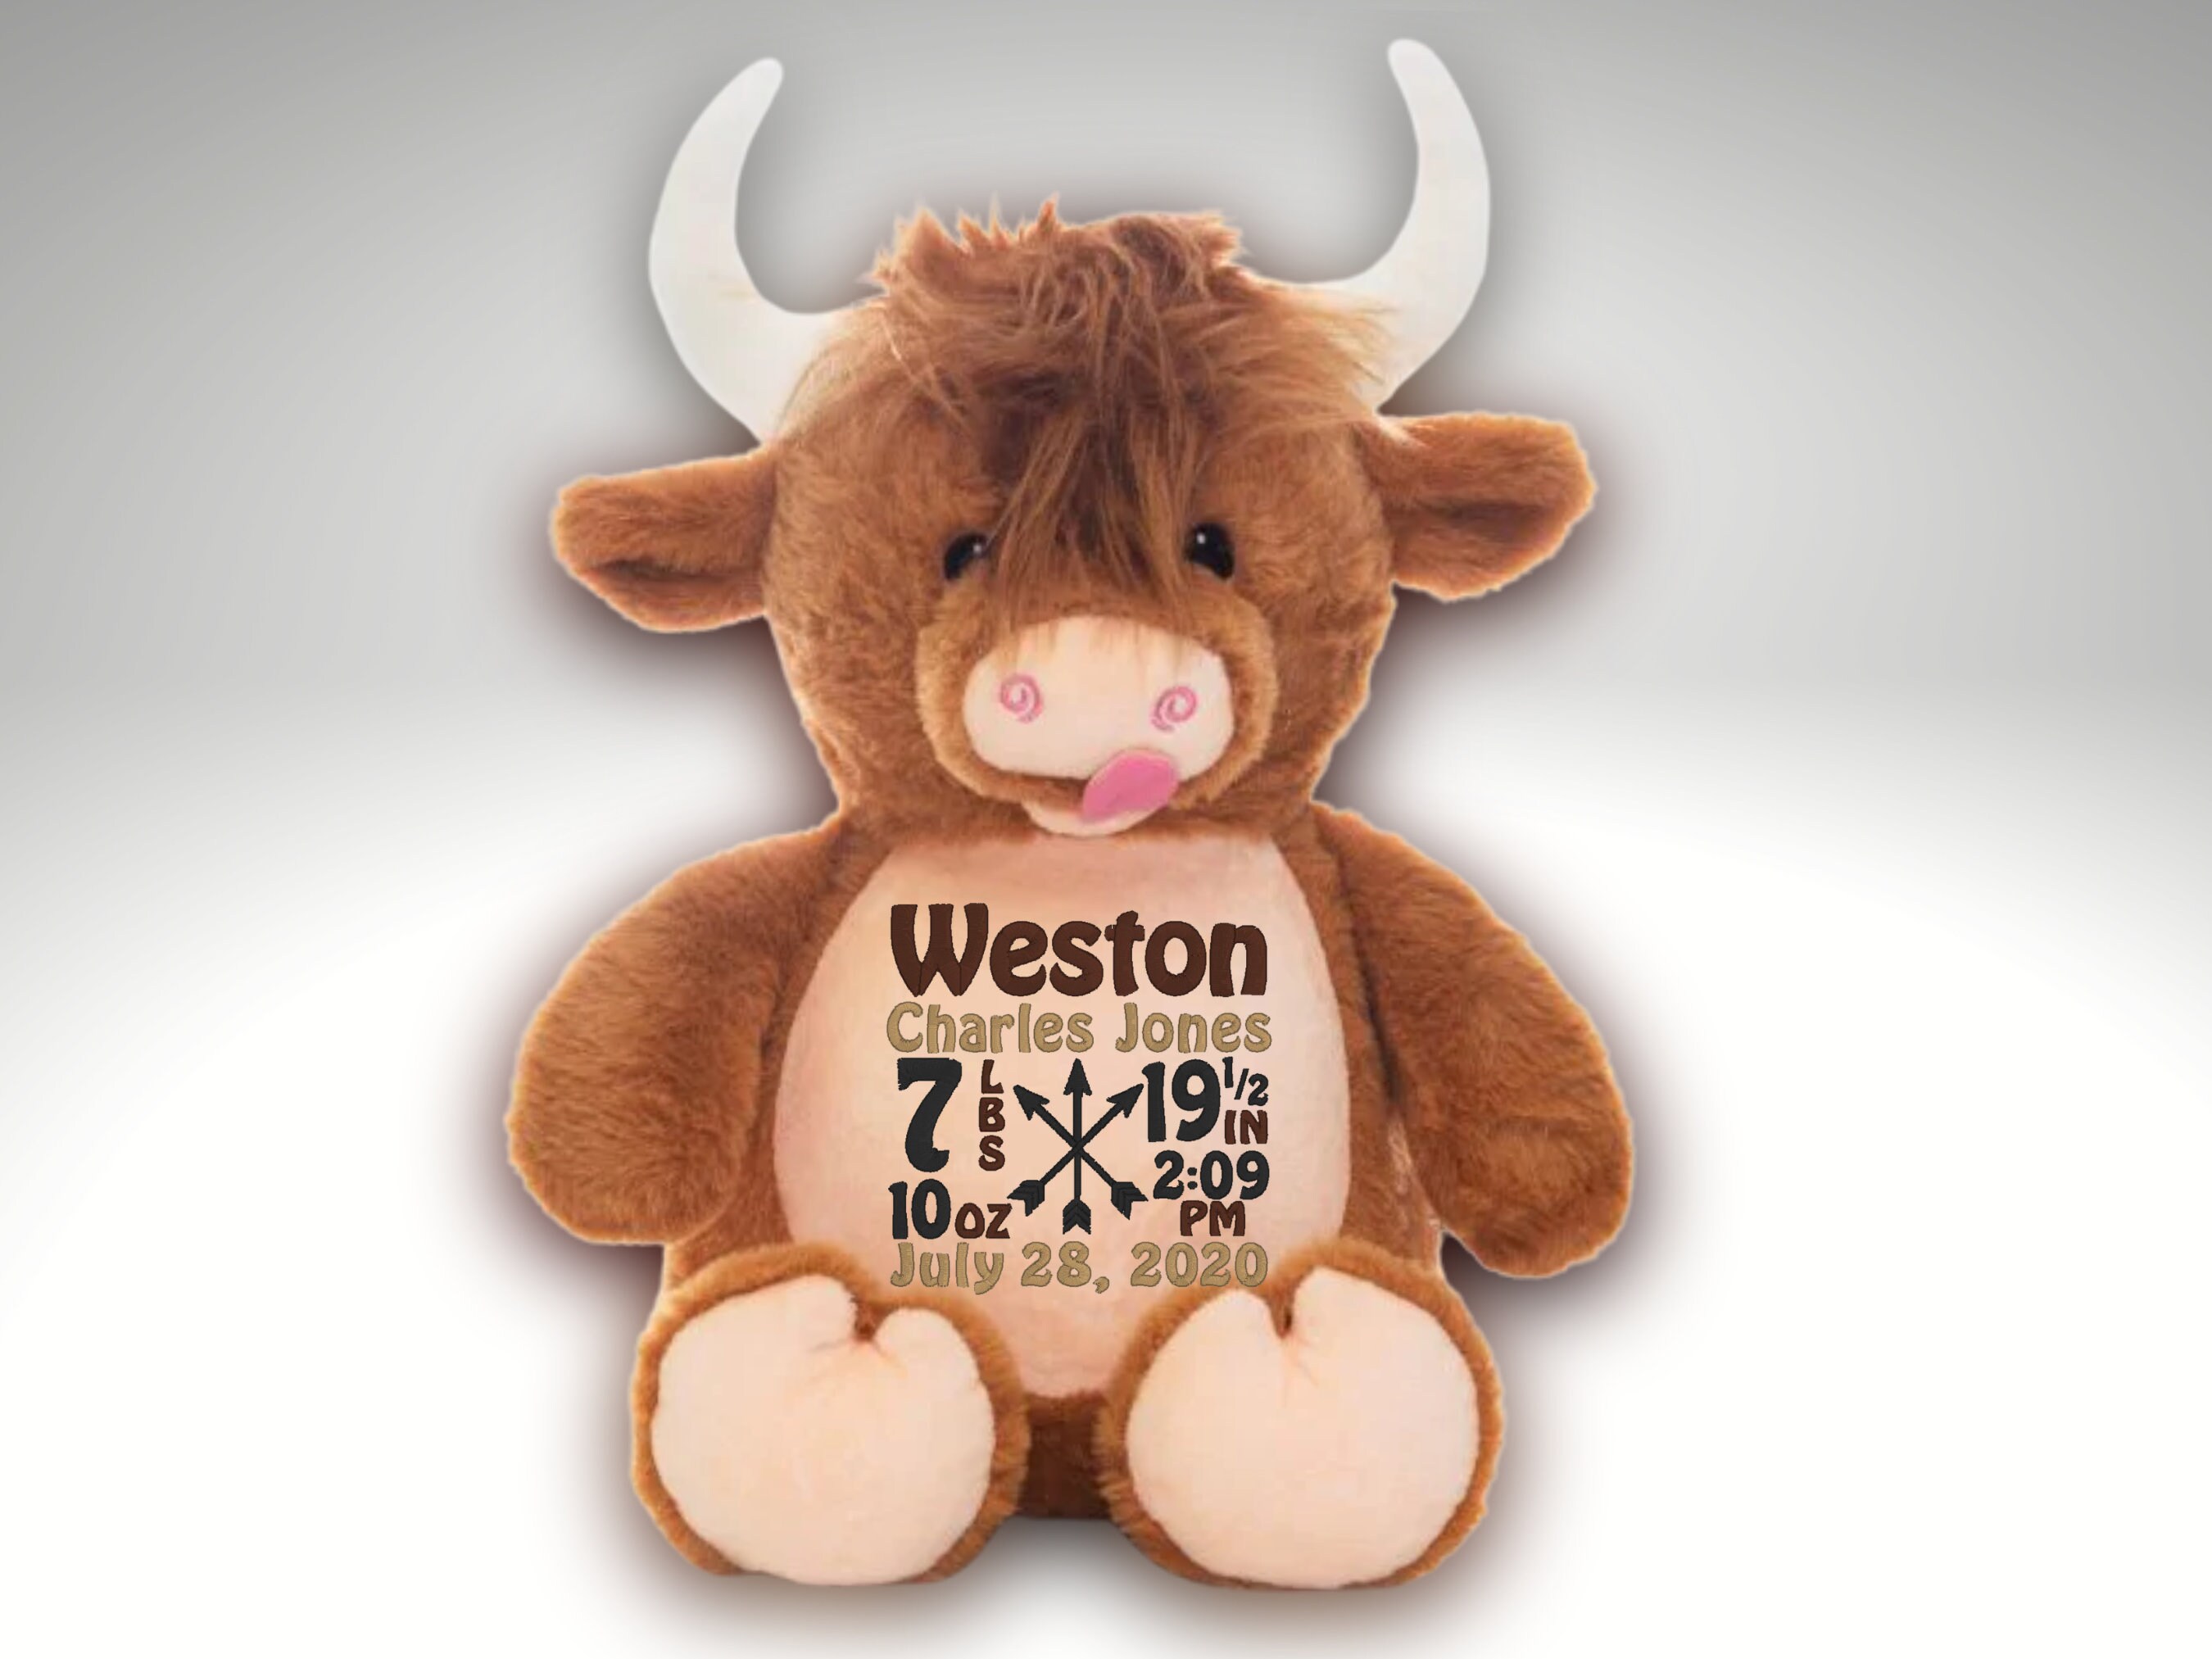 Crochet Raspberry Cow Plushie/ Crochet Cow Plush/ Amigurumi Cow/ Stuffed  Cow/ Chubby Cow/ Christmas Gift/ Farm Animal/ Crochet Plushies 